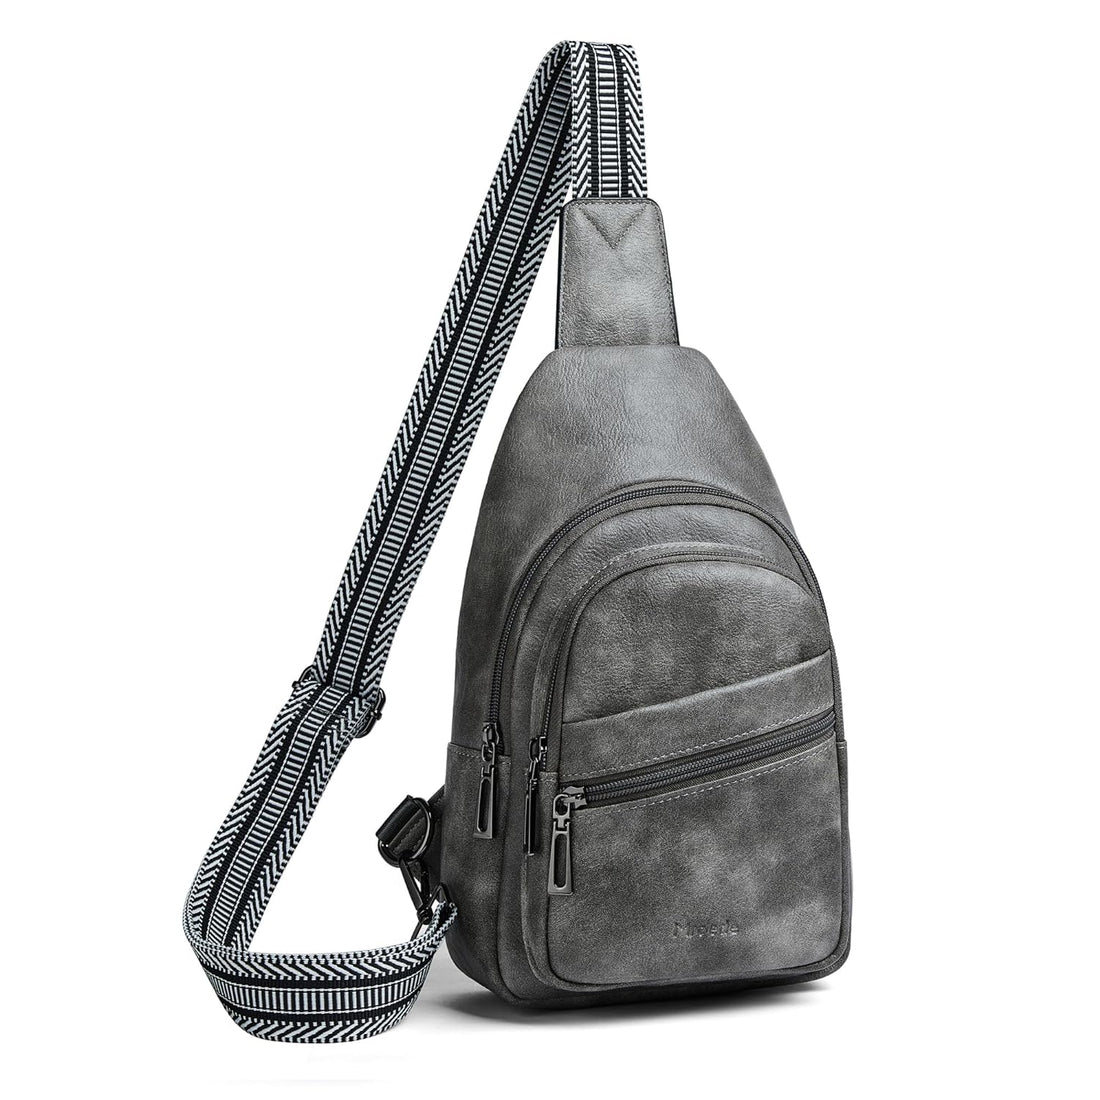 Mroede Sling Bag for Women Chest Bag PU Leather Sling Bag for Women Daypack Satchel Cross Body Bag for school Traveling, 2-2 Two-tone Dark Grey